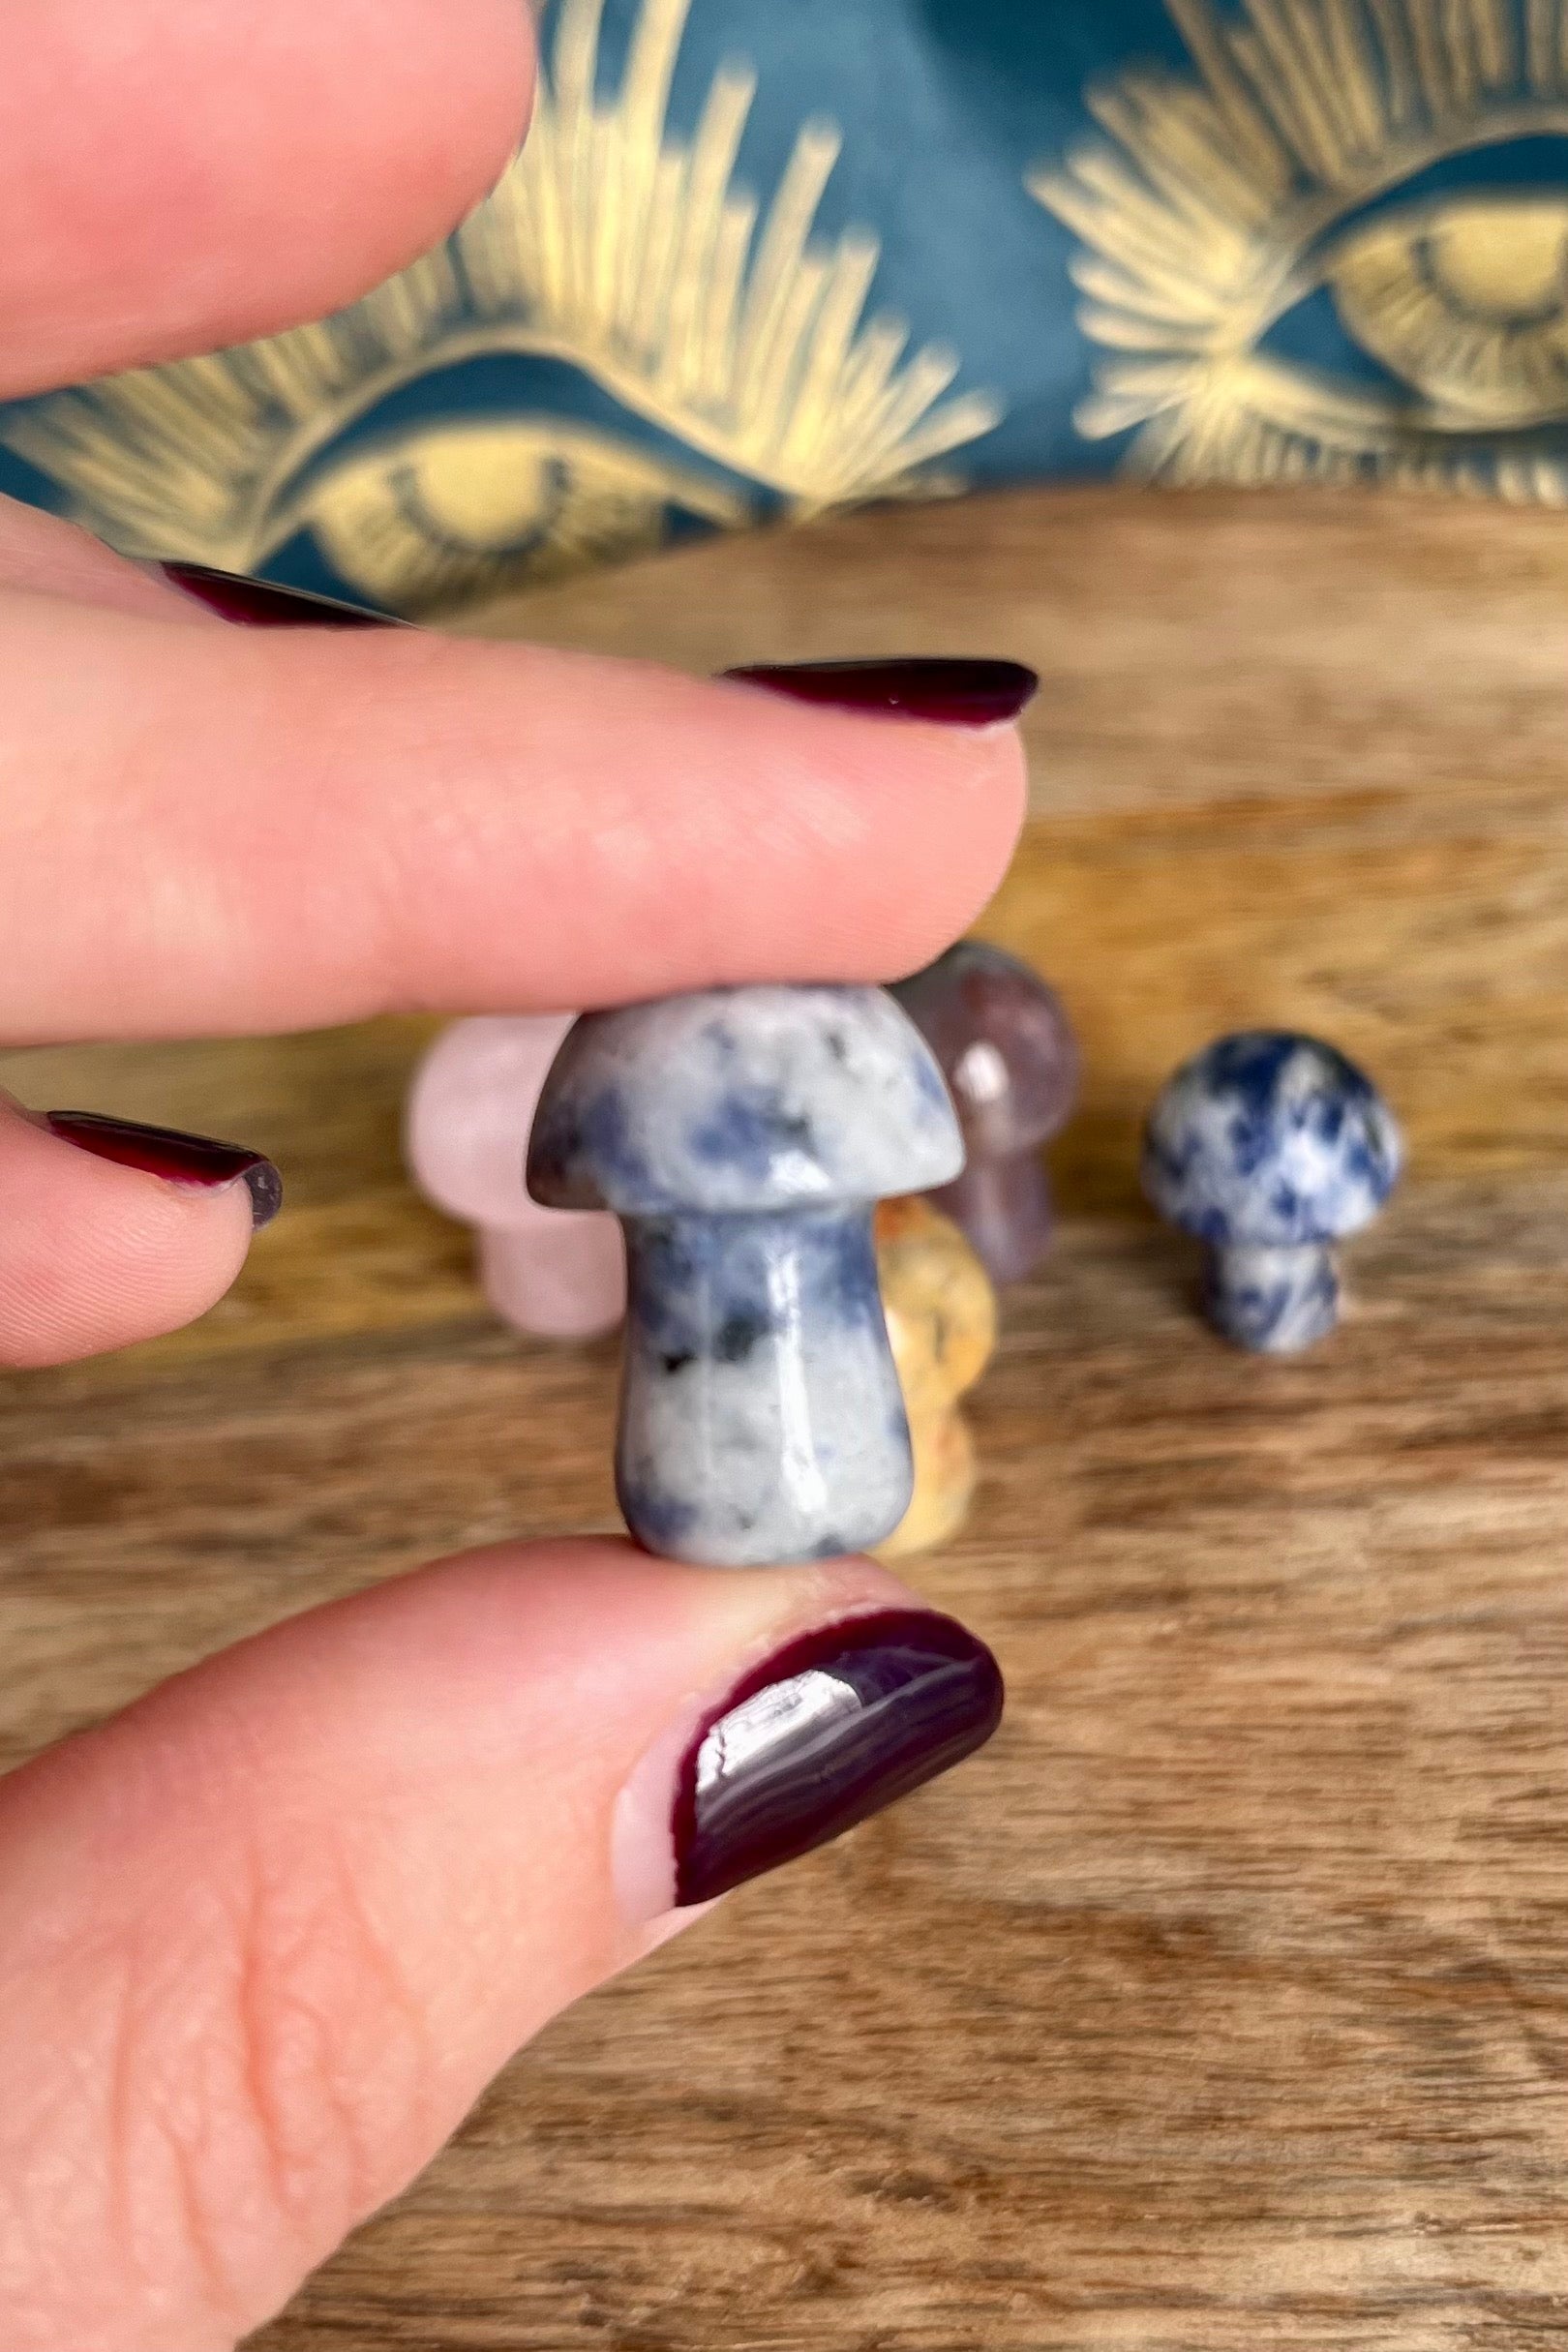 Mini Stone Mushrooms Decor from GemCadet